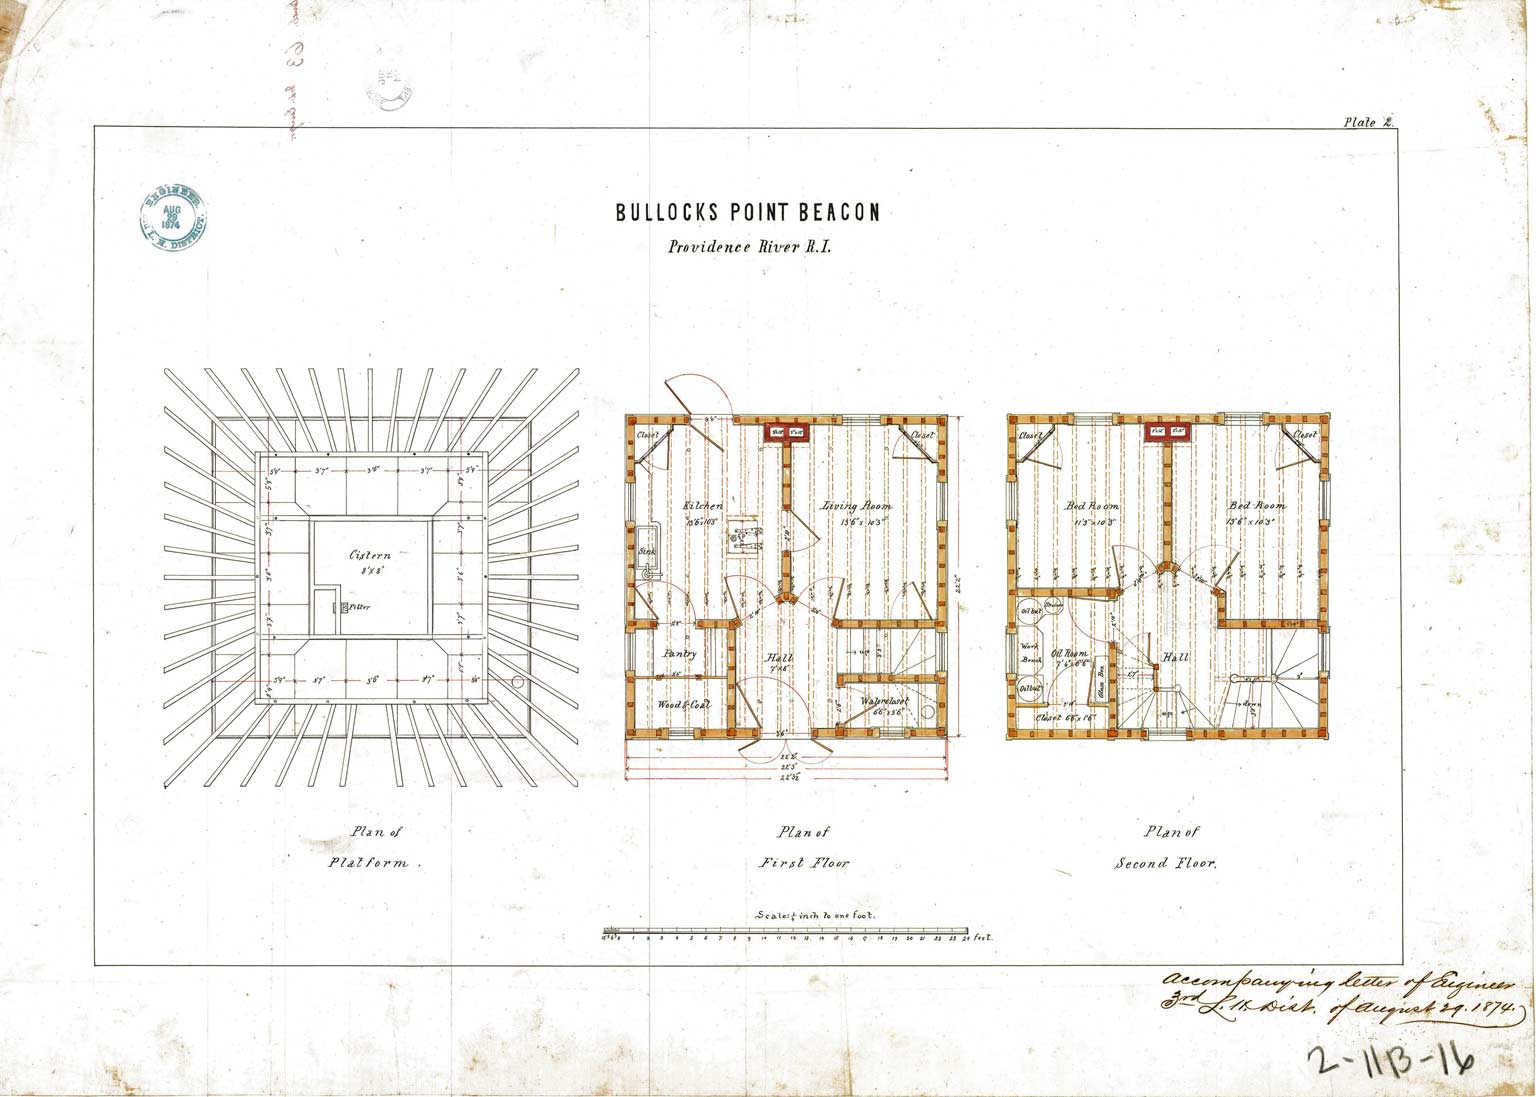 Floor Plan of Bullock's Point Lighthouse - 1874